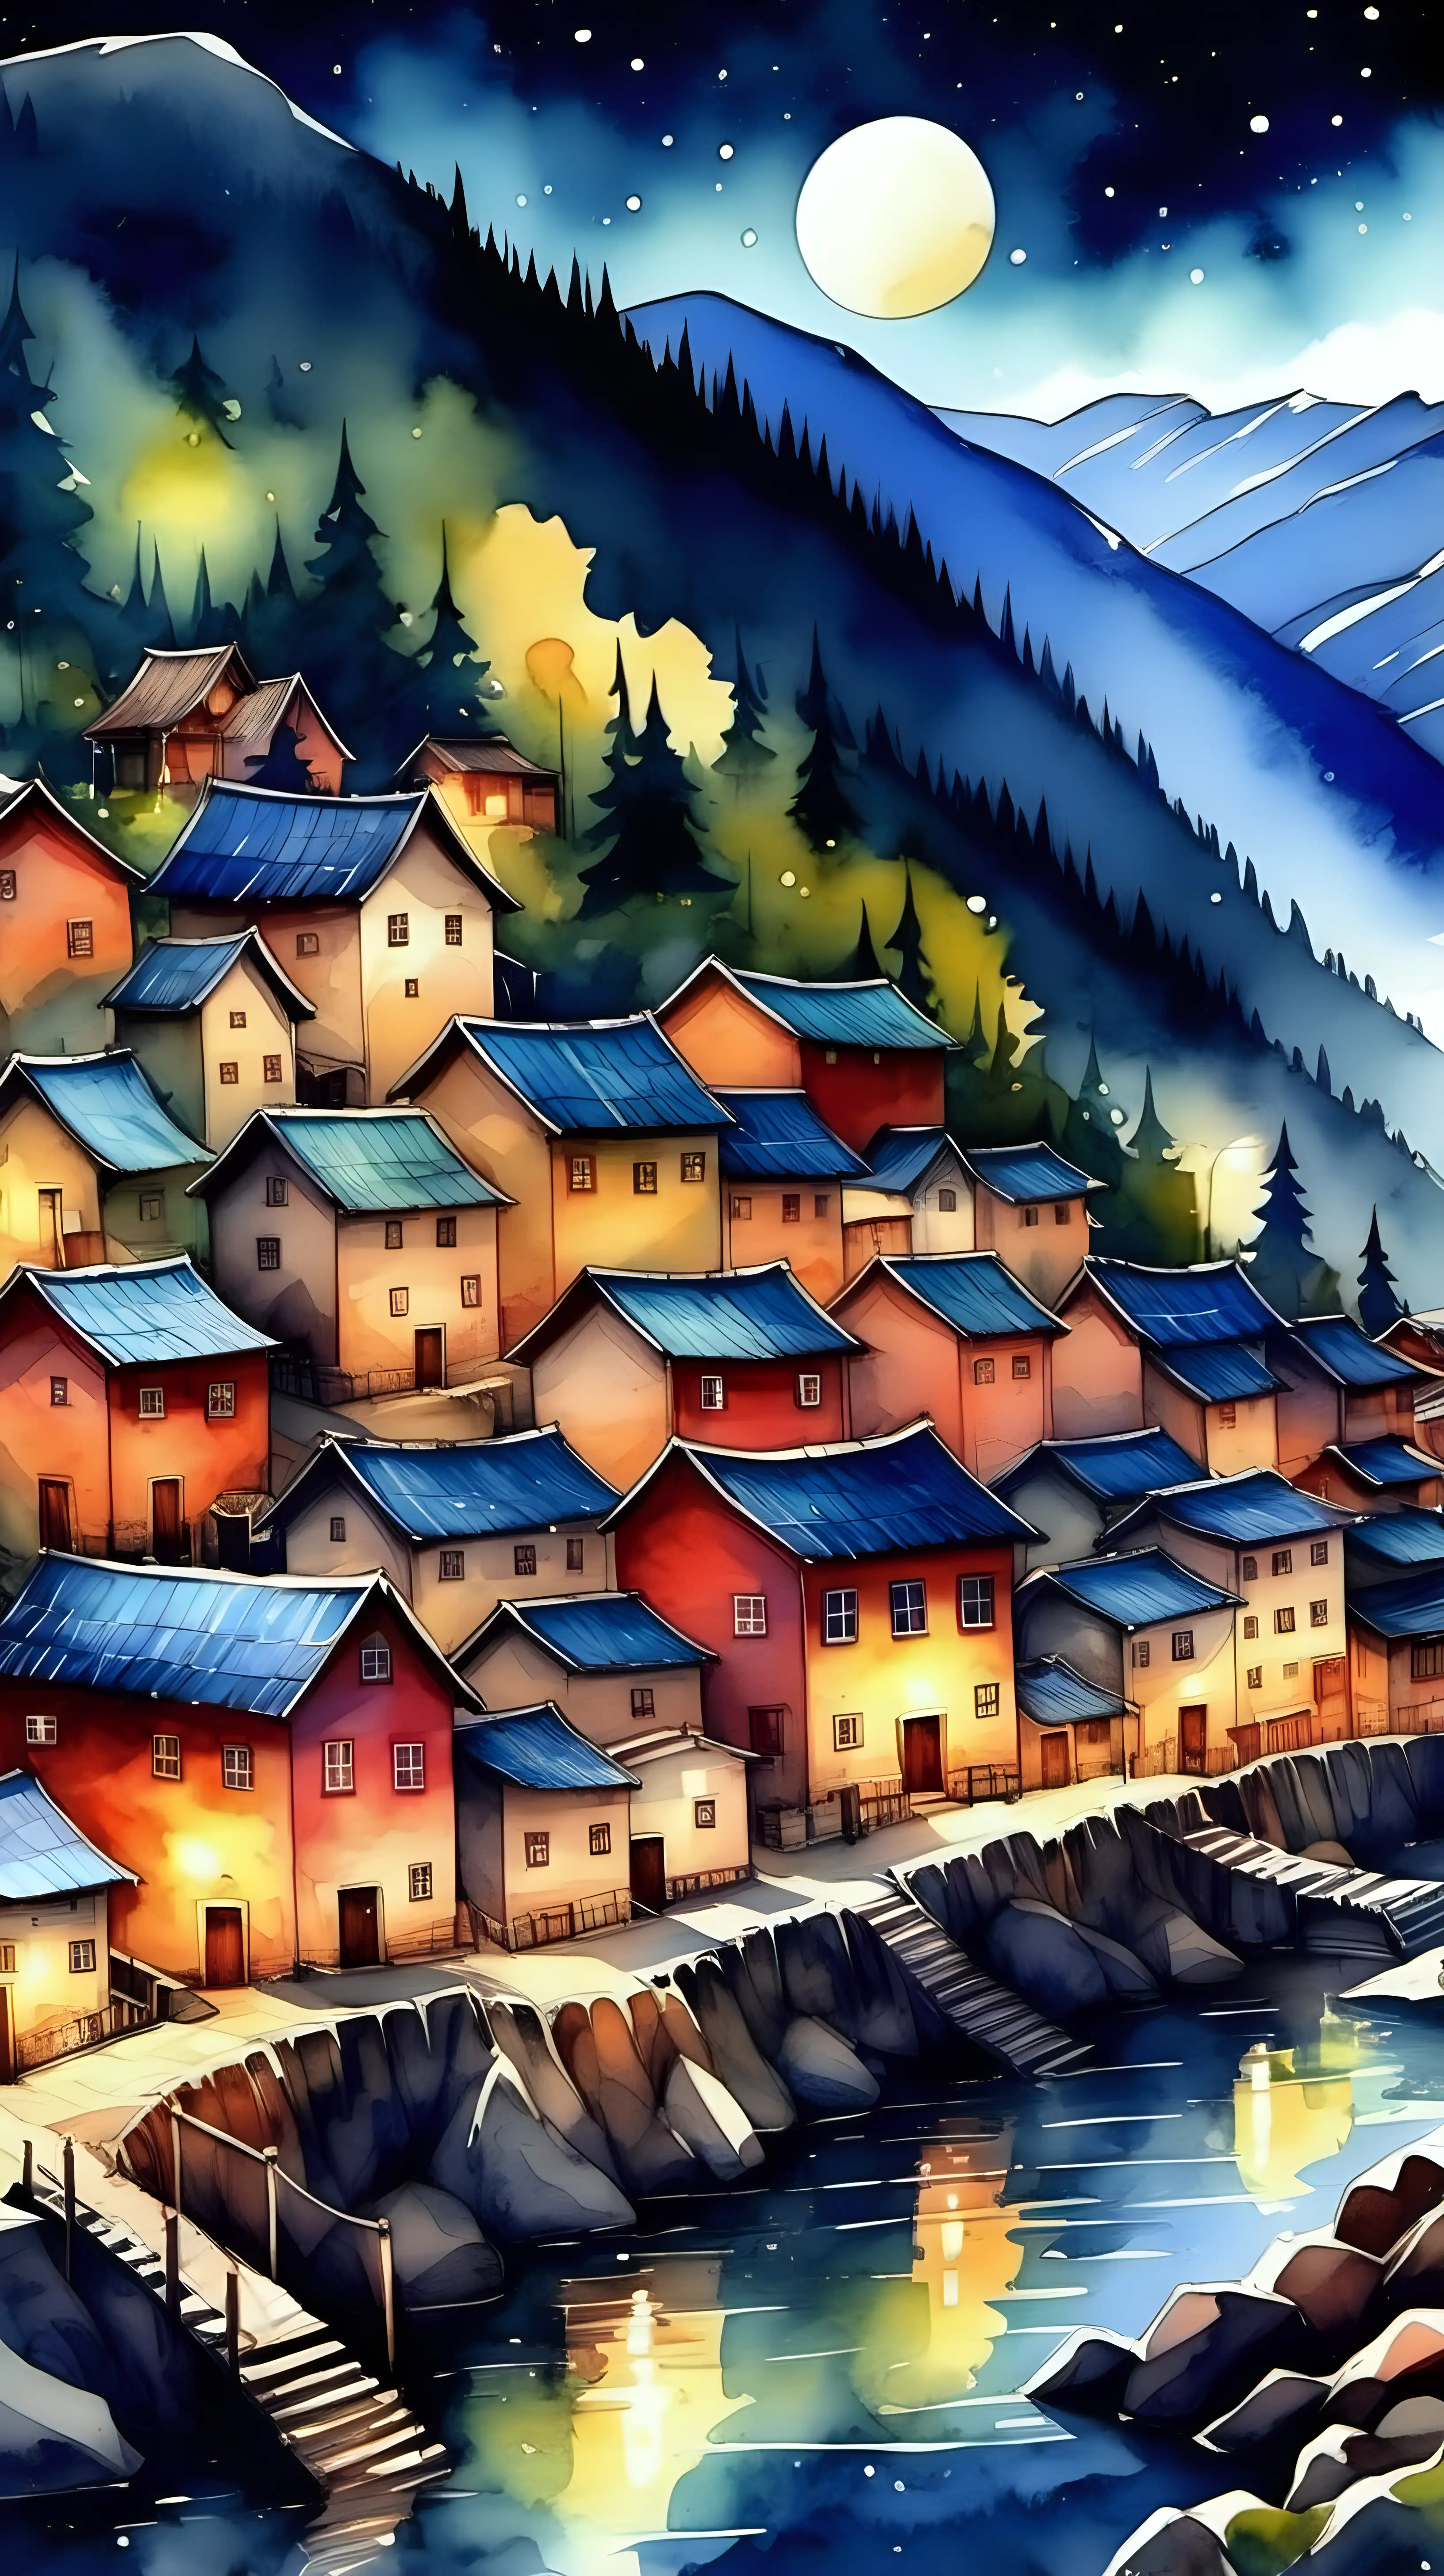 Enchanting Mountain Village Watercolor Painting